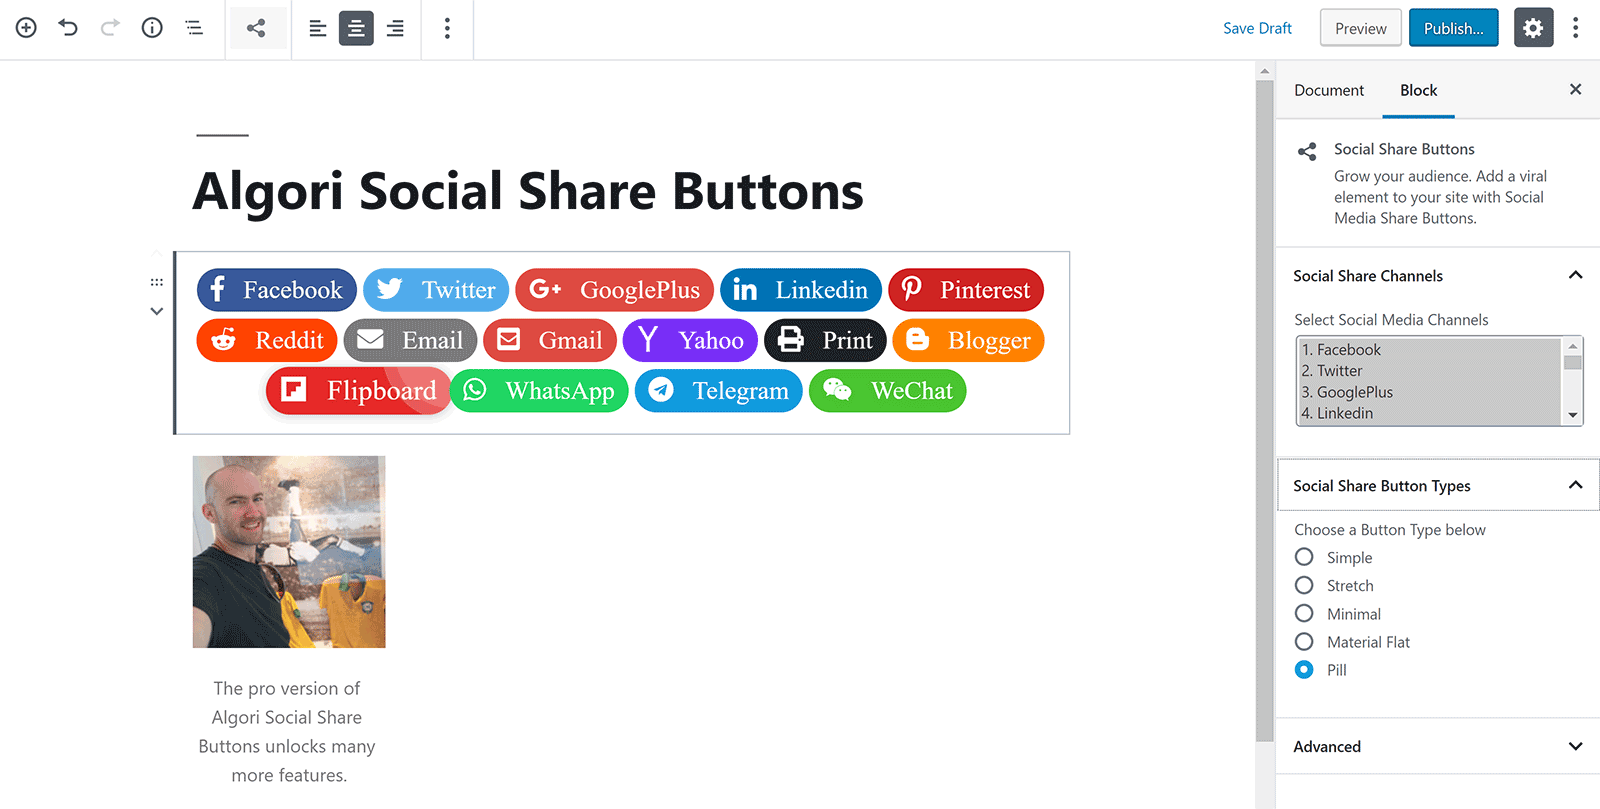 Algori Social Share Buttons